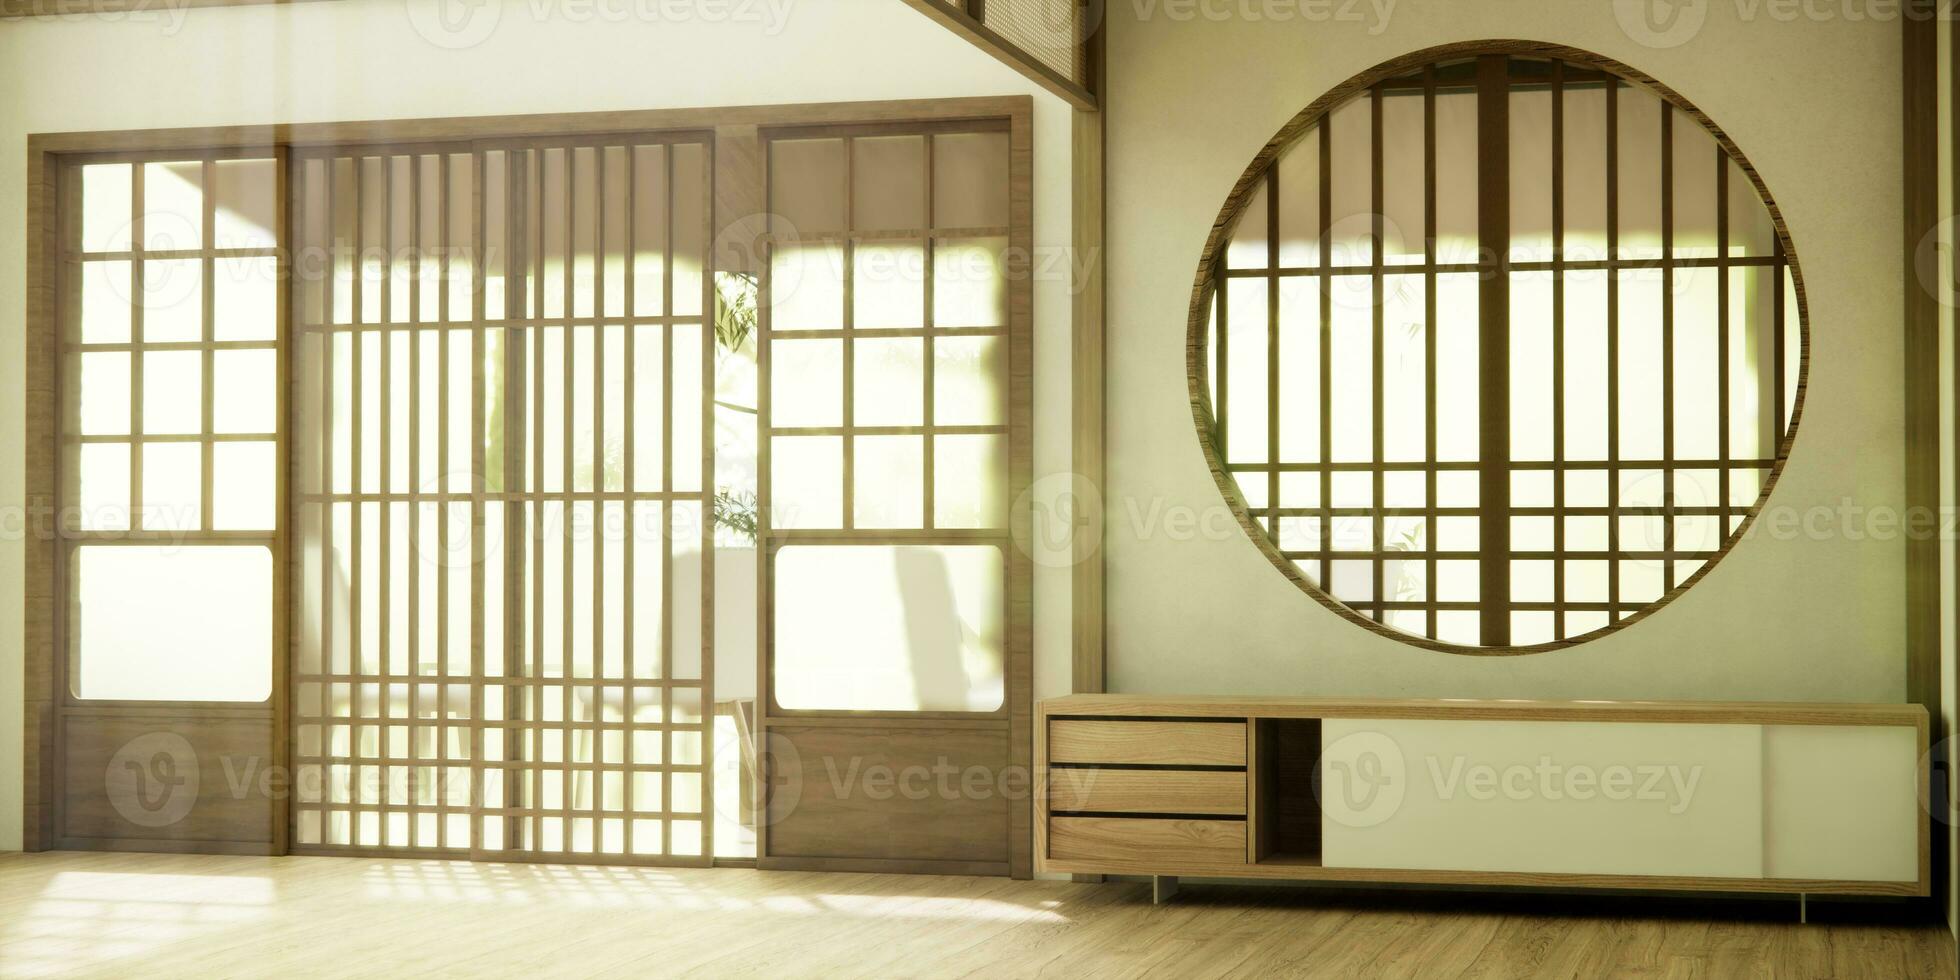 kabinet in gang schoon Japans minimalistische kamer interieur. foto